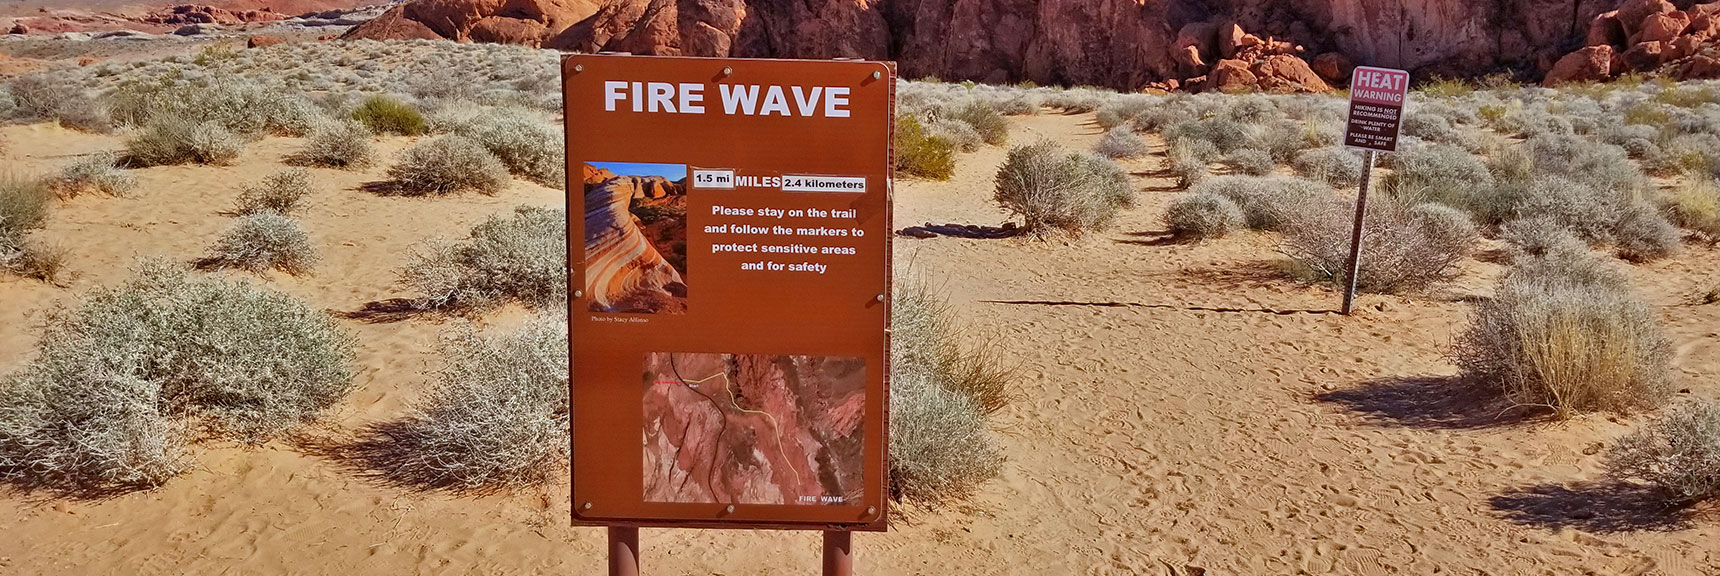 Firewave in Valley of Fire State Park, Nevada, Slide 001